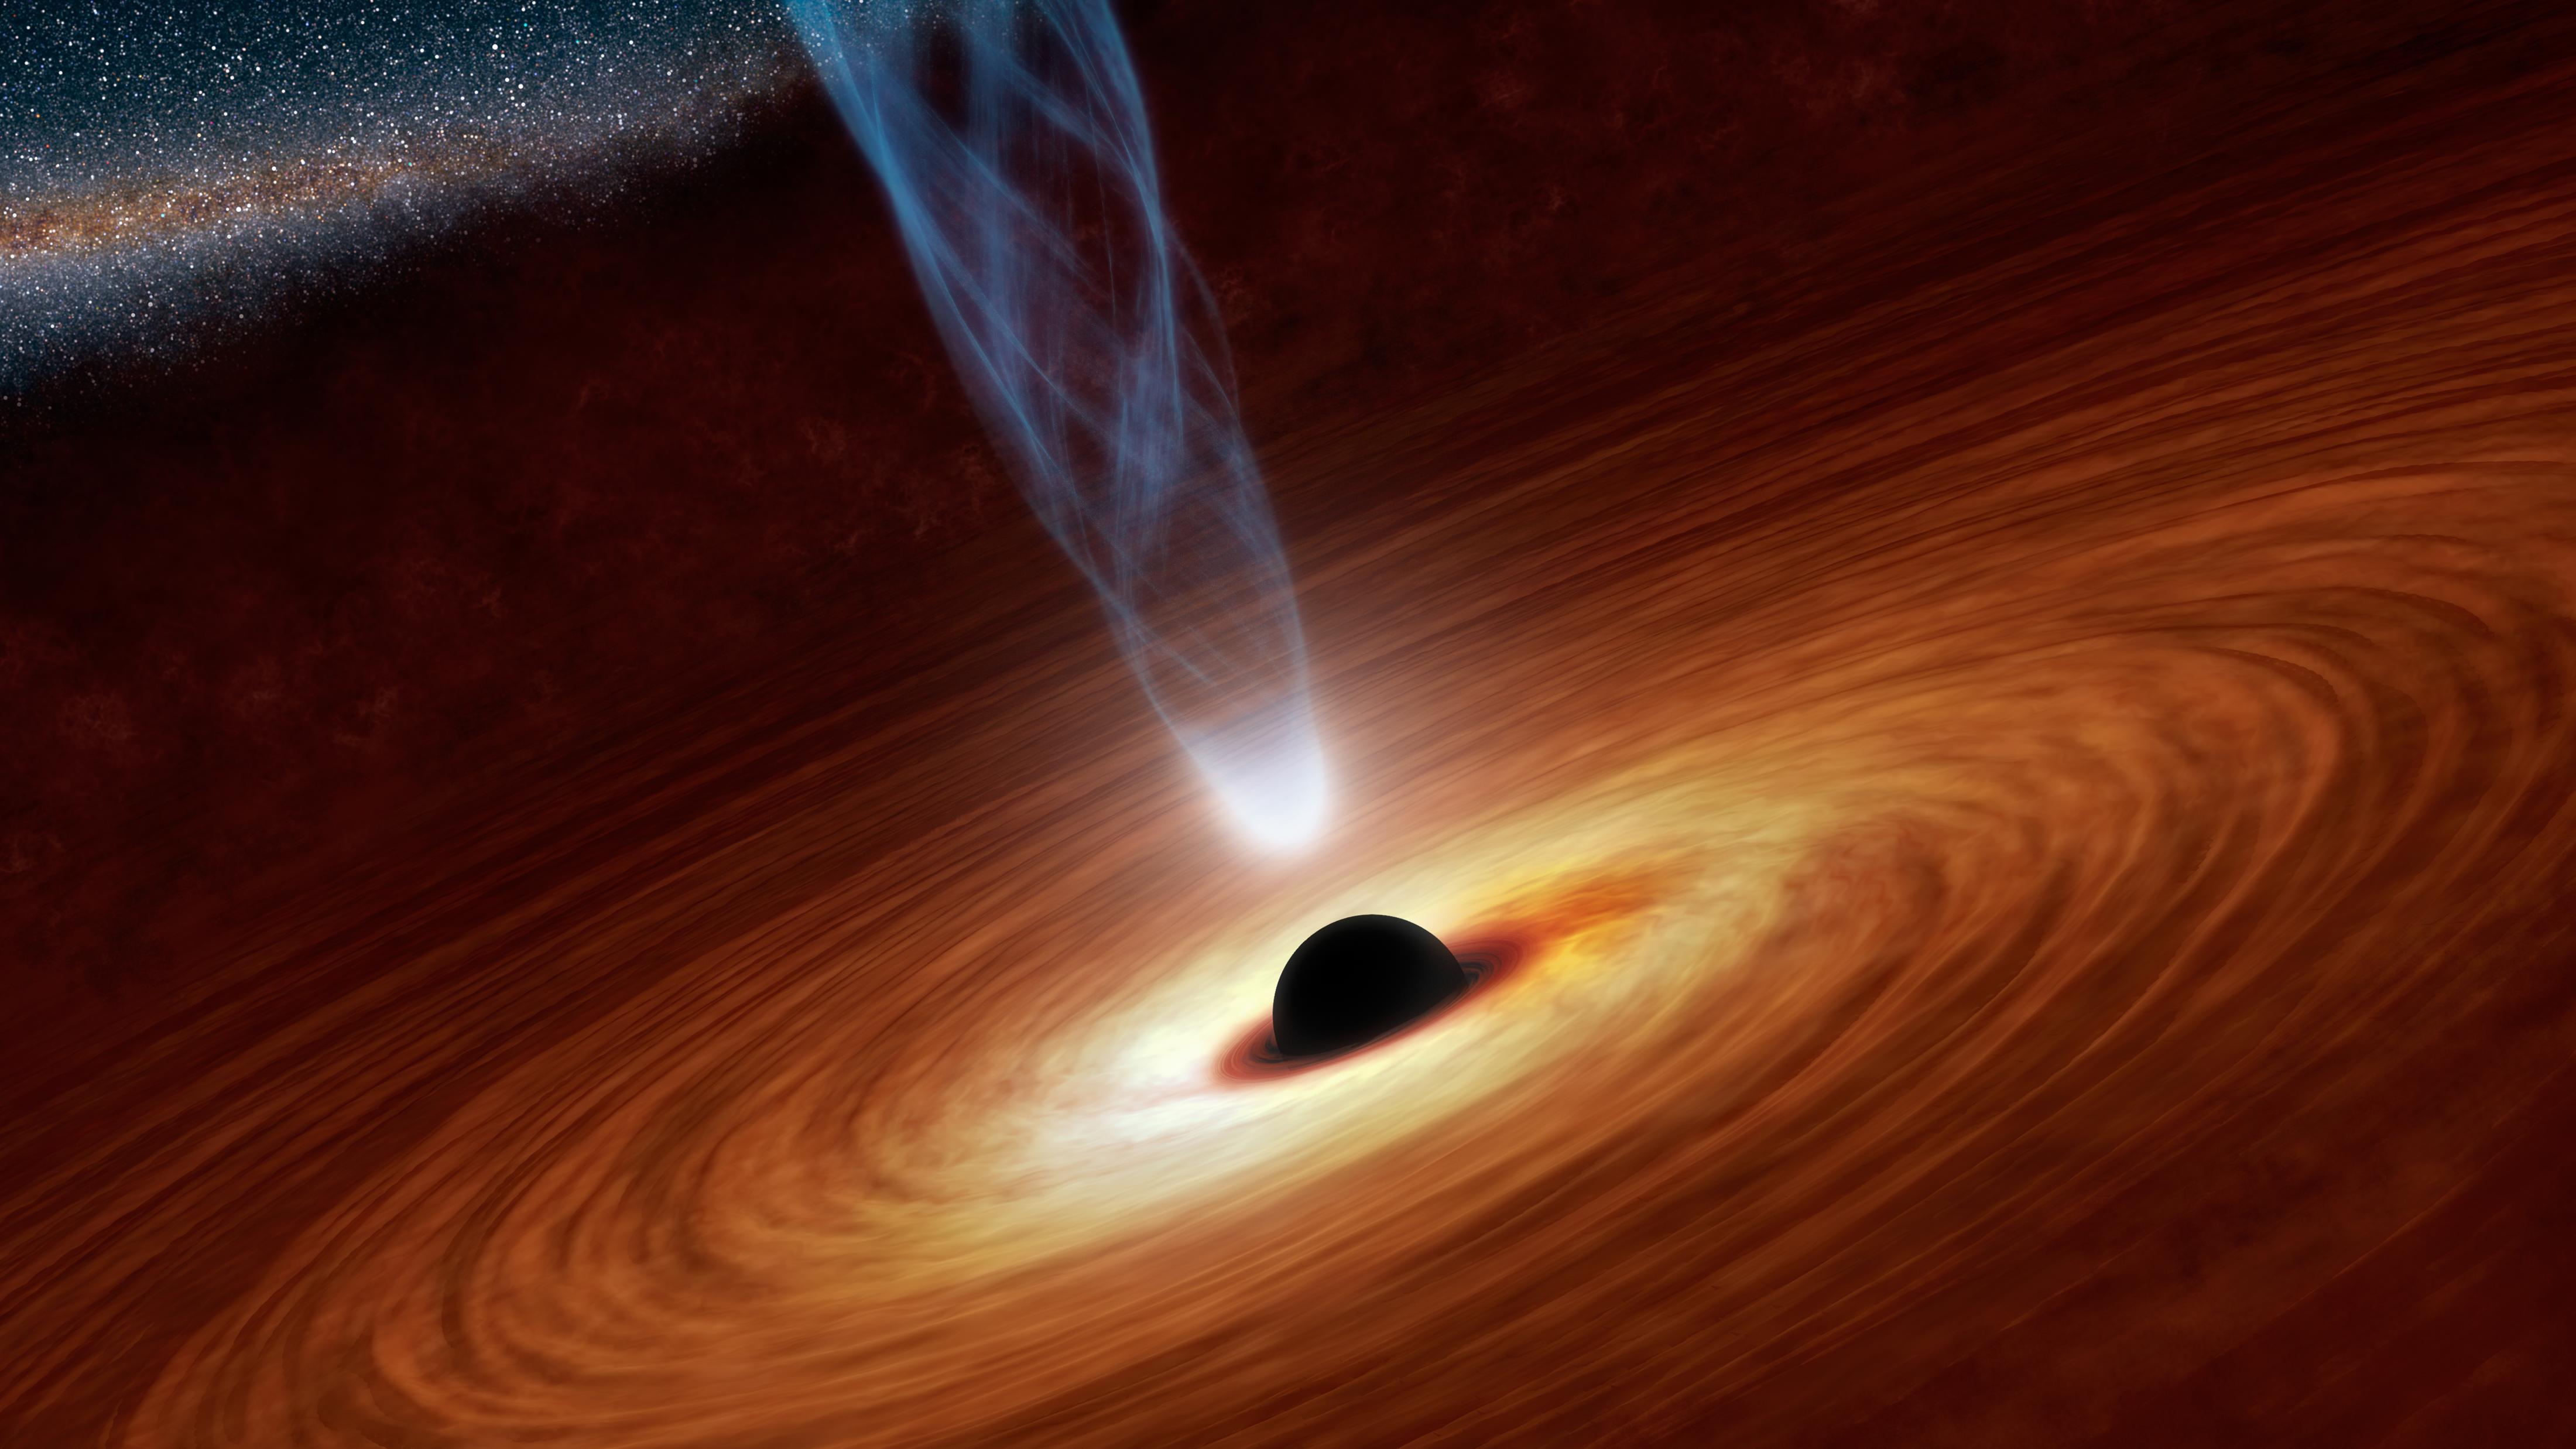 Black hole, the free encyclopedia